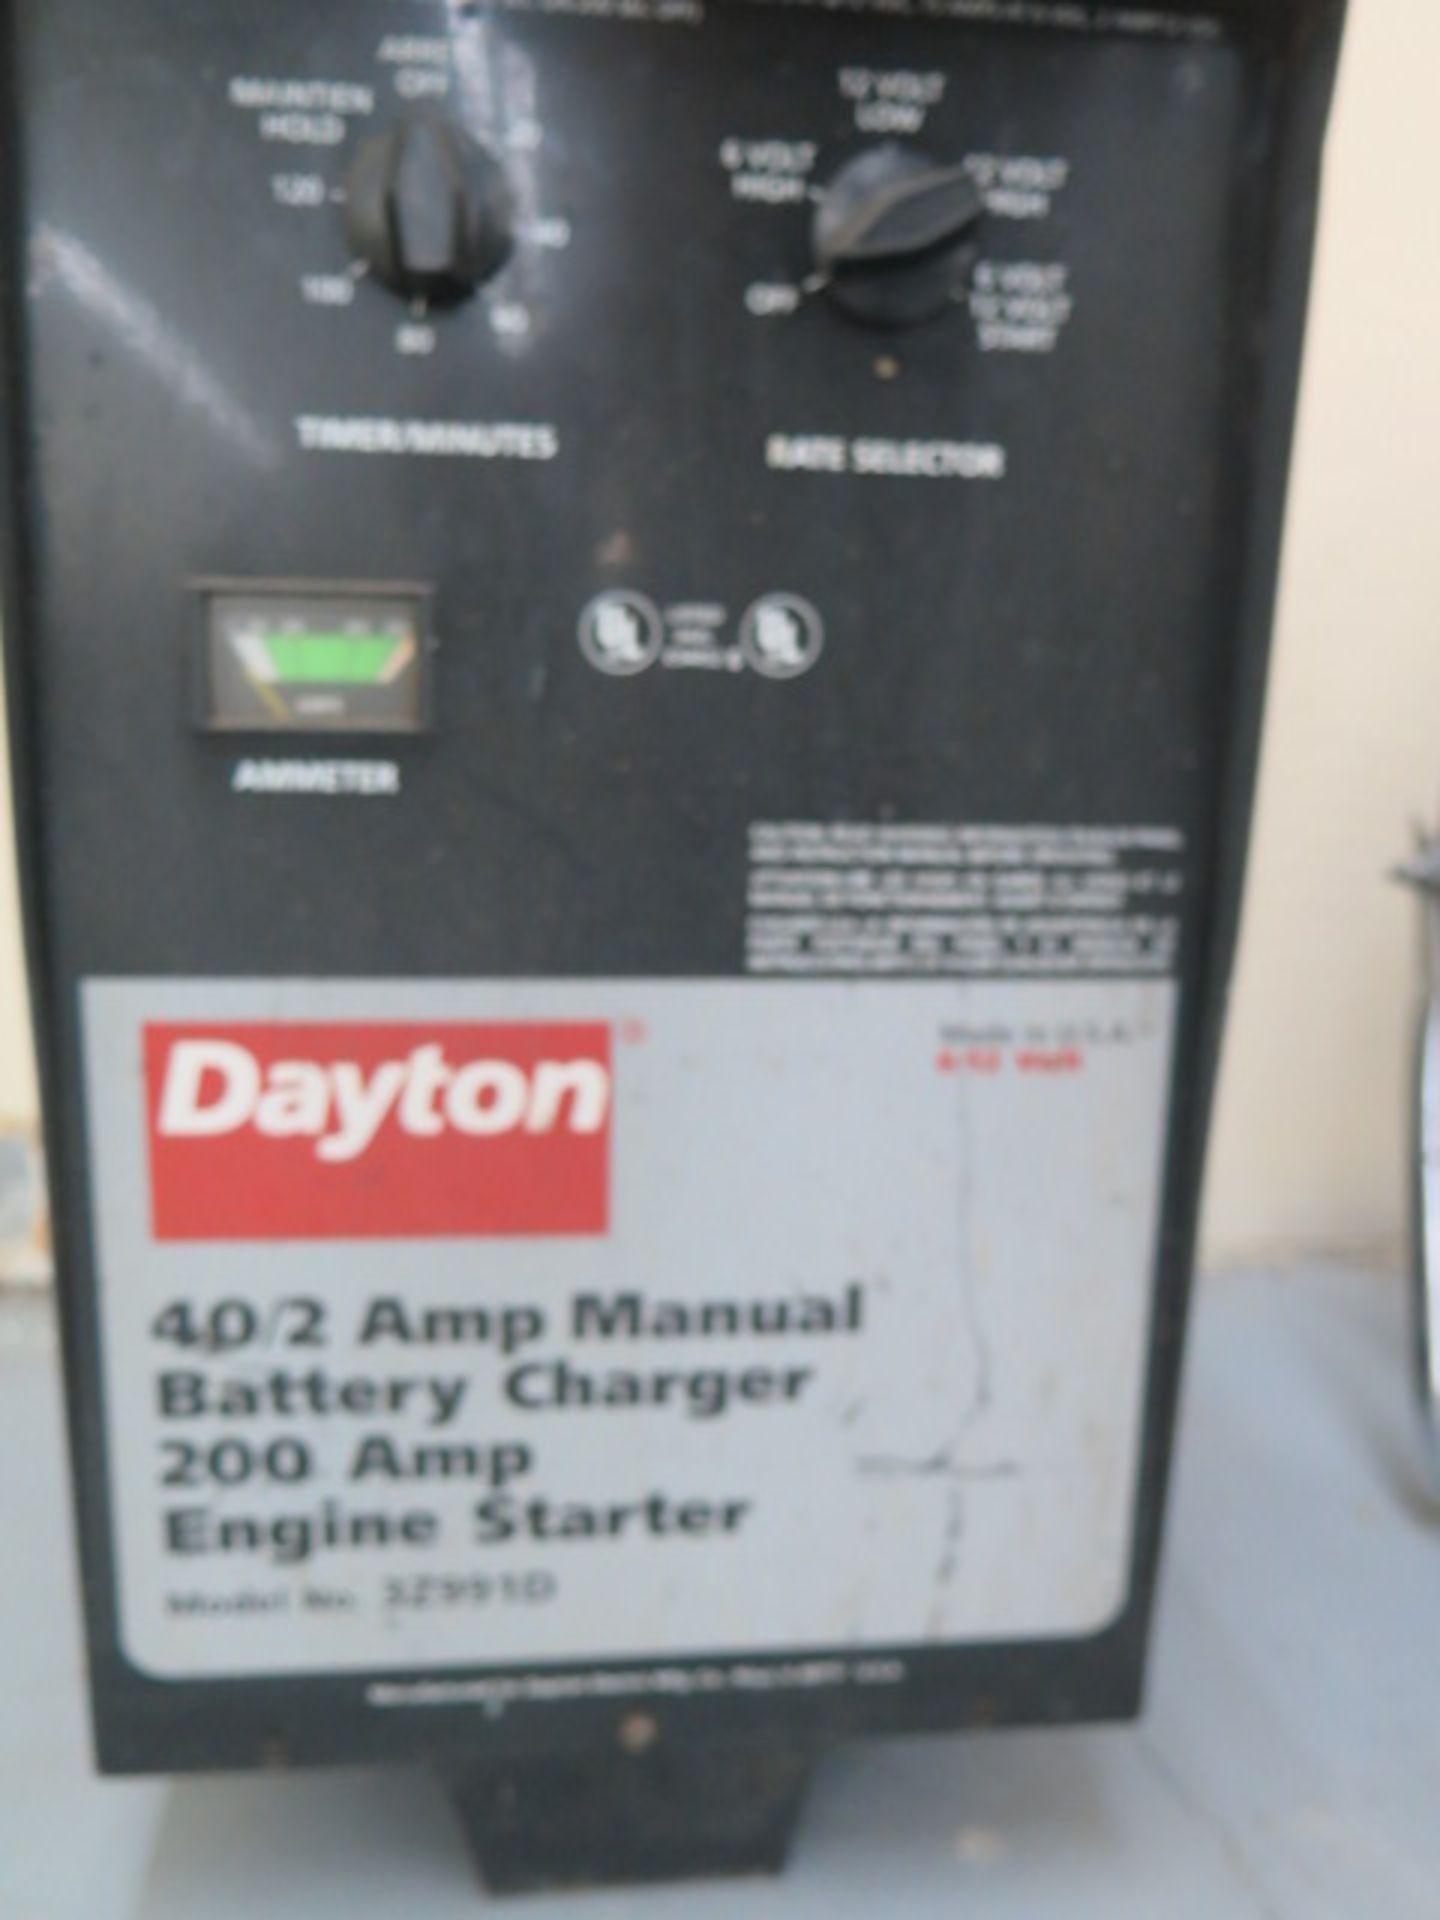 Dayton 40 Amp Battery Charger - Image 2 of 2